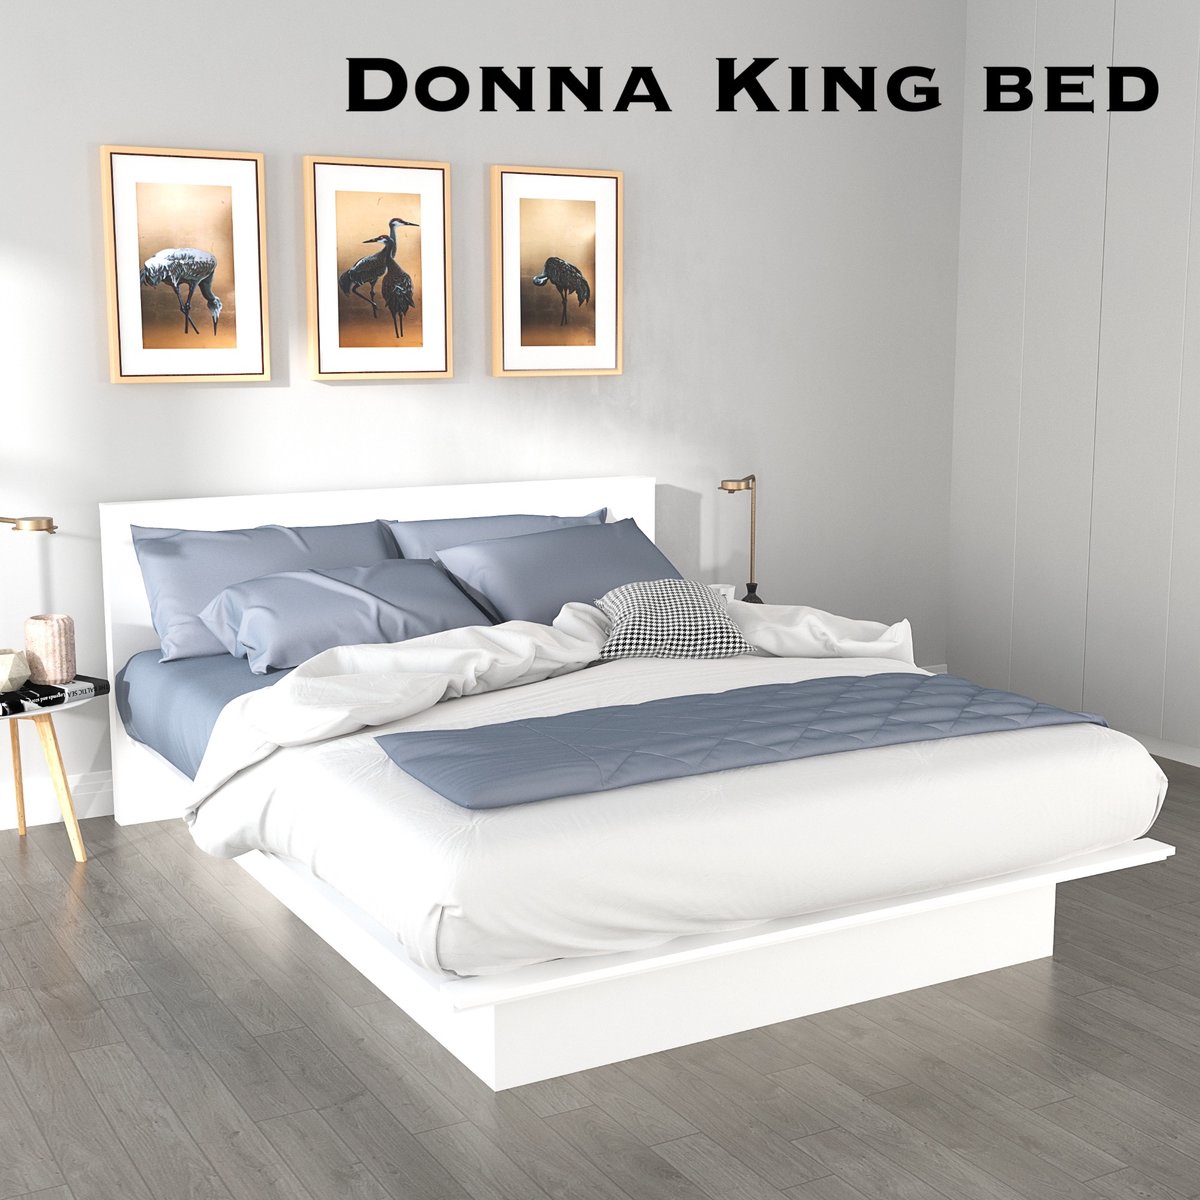 Tomato Home เตียง Donna King bed 6ฟุต เตียงนอน เตียงไม้ เตียง Donna 6ฟุต  มินิมอล TH-B-DK-01-ขาว